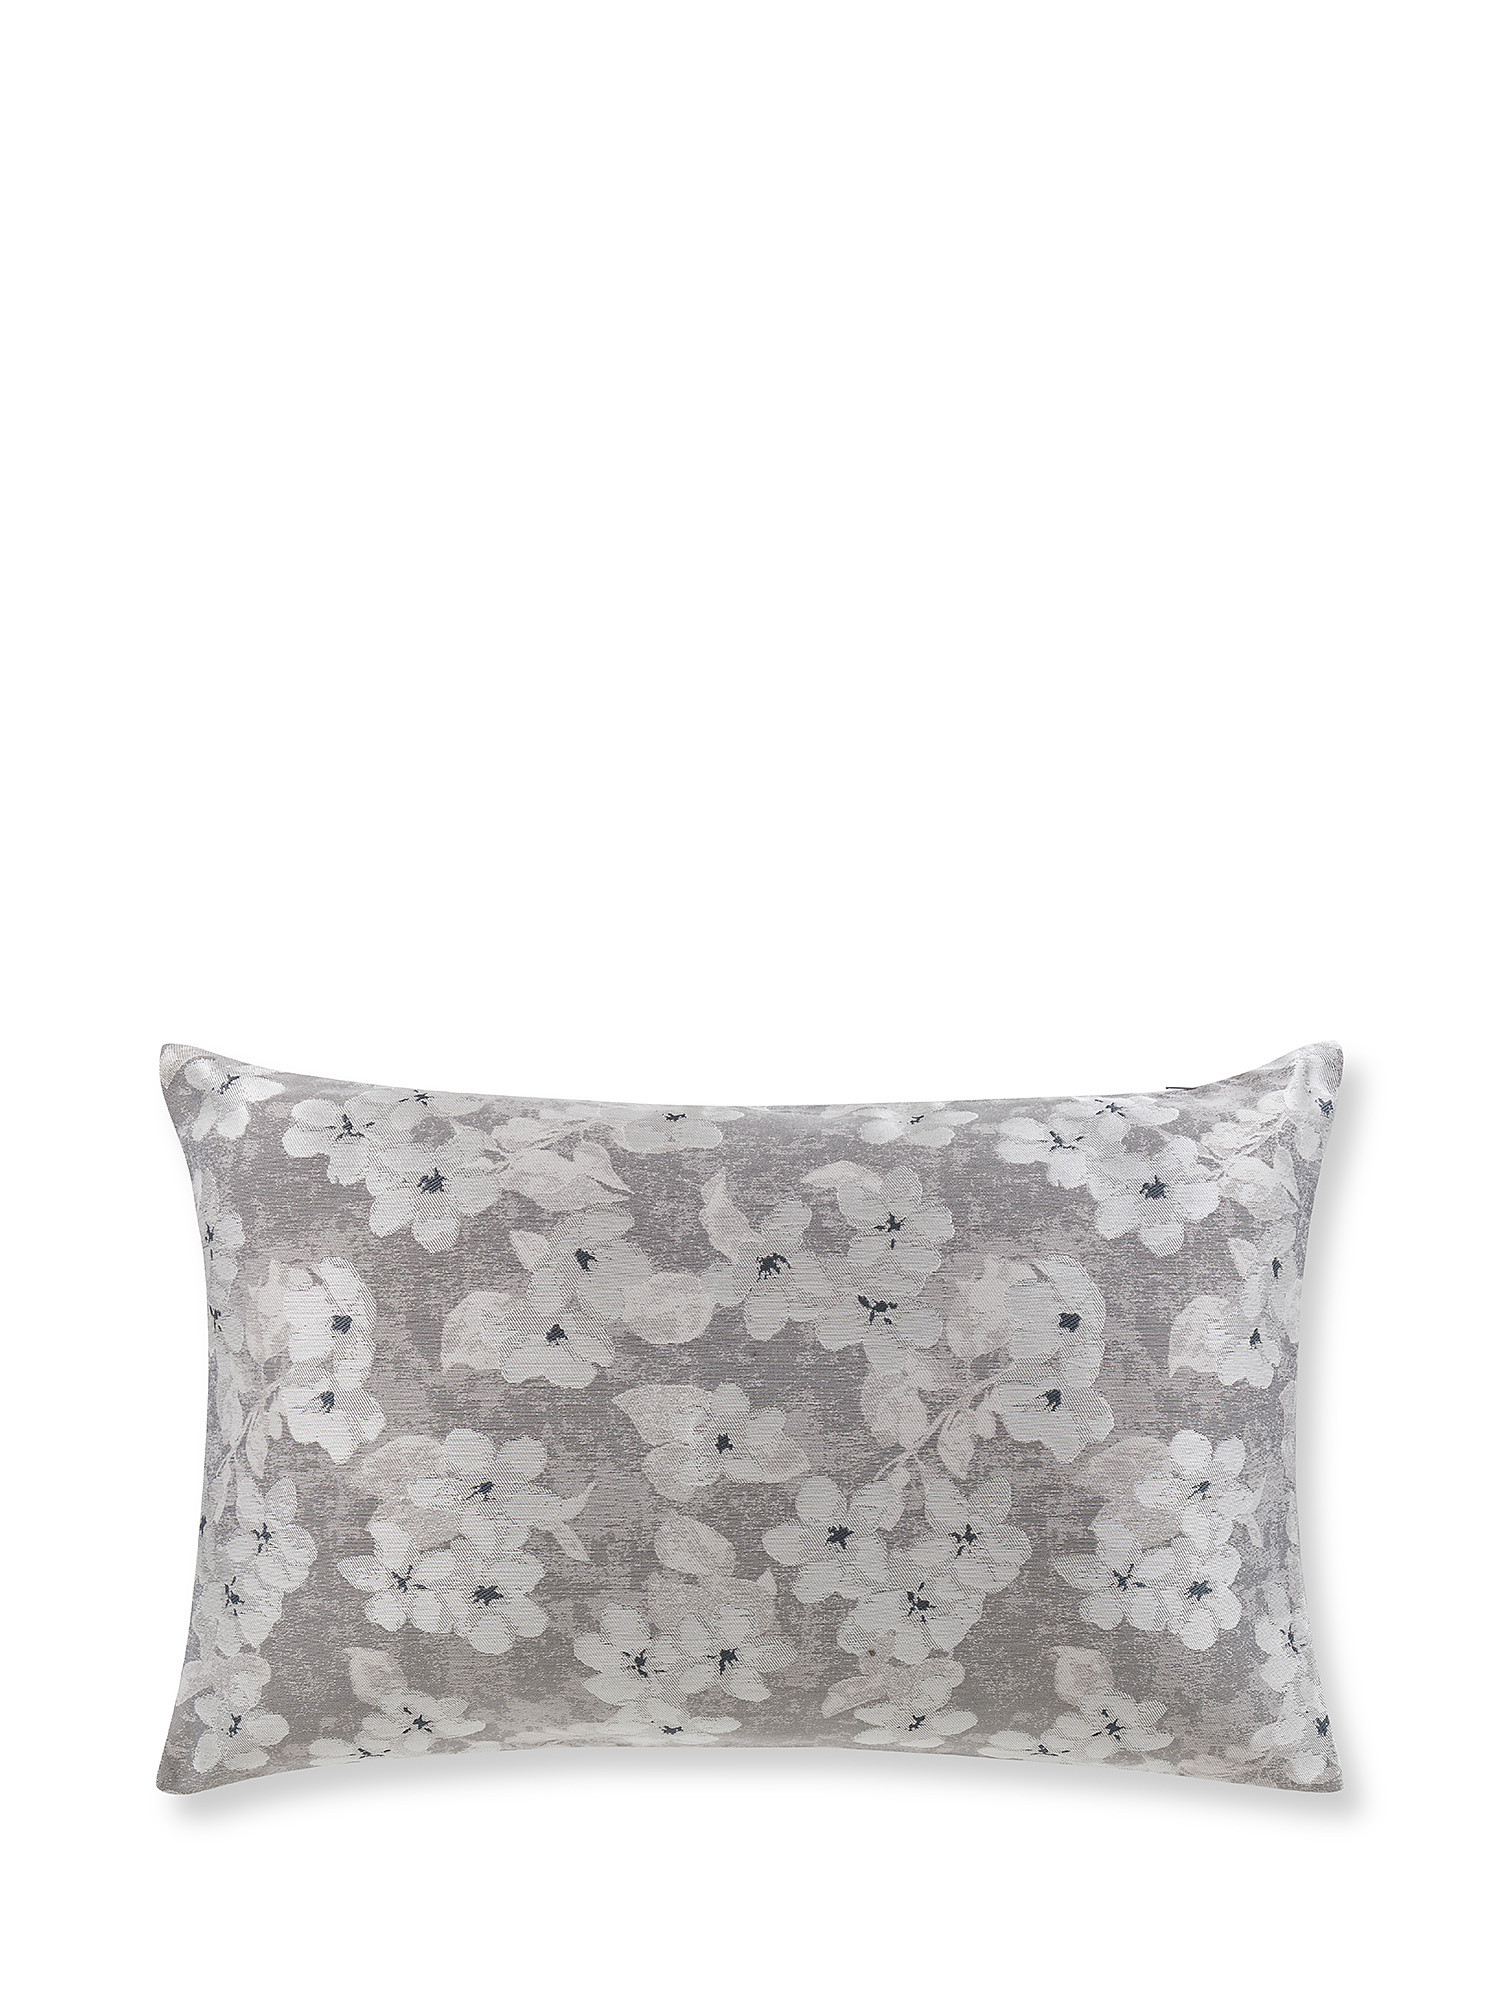 Jacquard cushion with flower motif 35x55cm, Grey, large image number 0